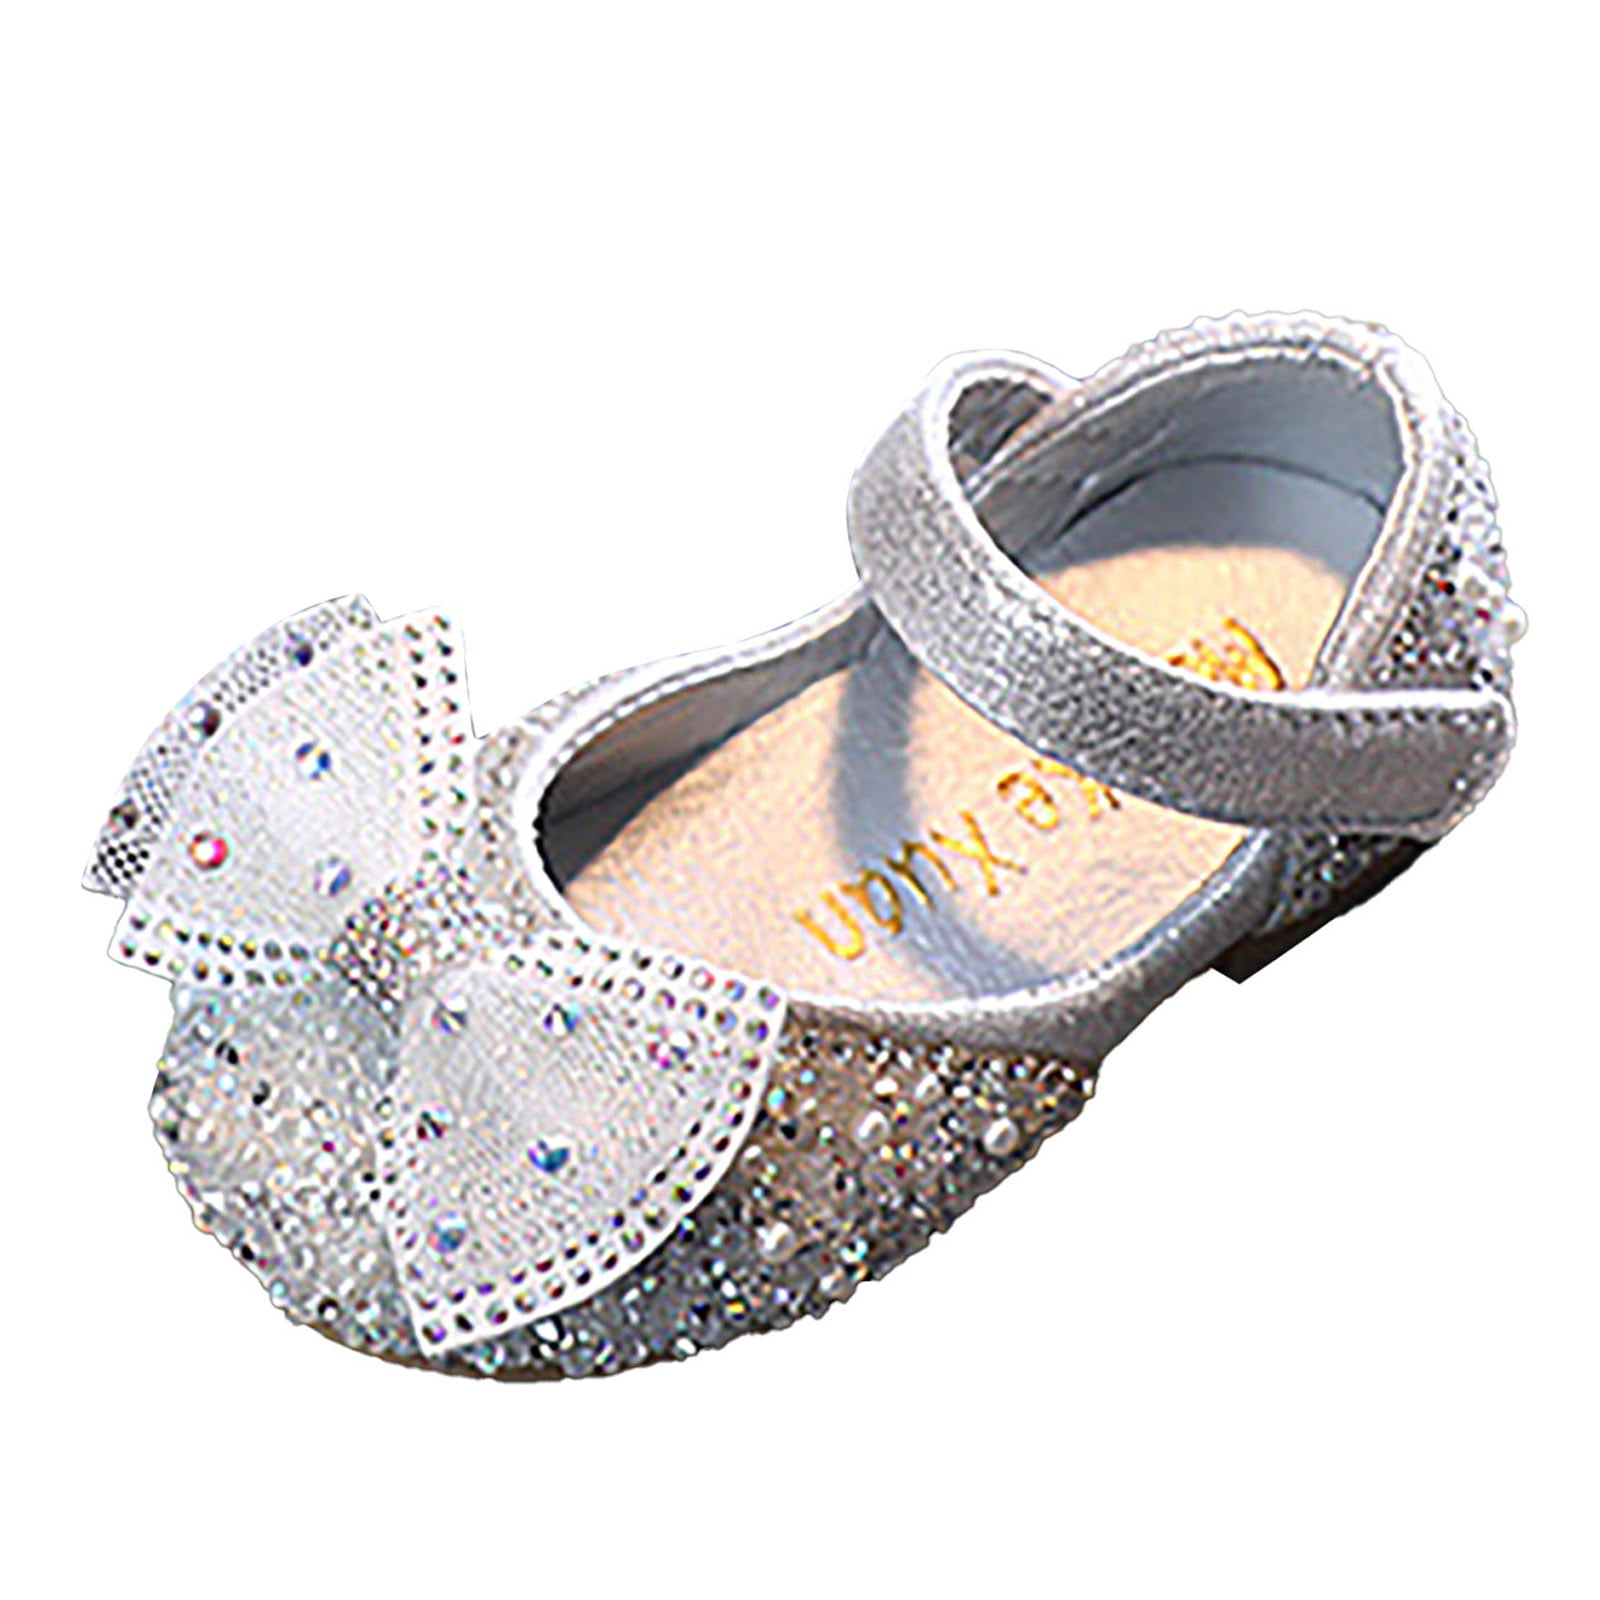 adviicd Fashion Shoes for Little Girls Girls Sandals Low Heels Dress ...